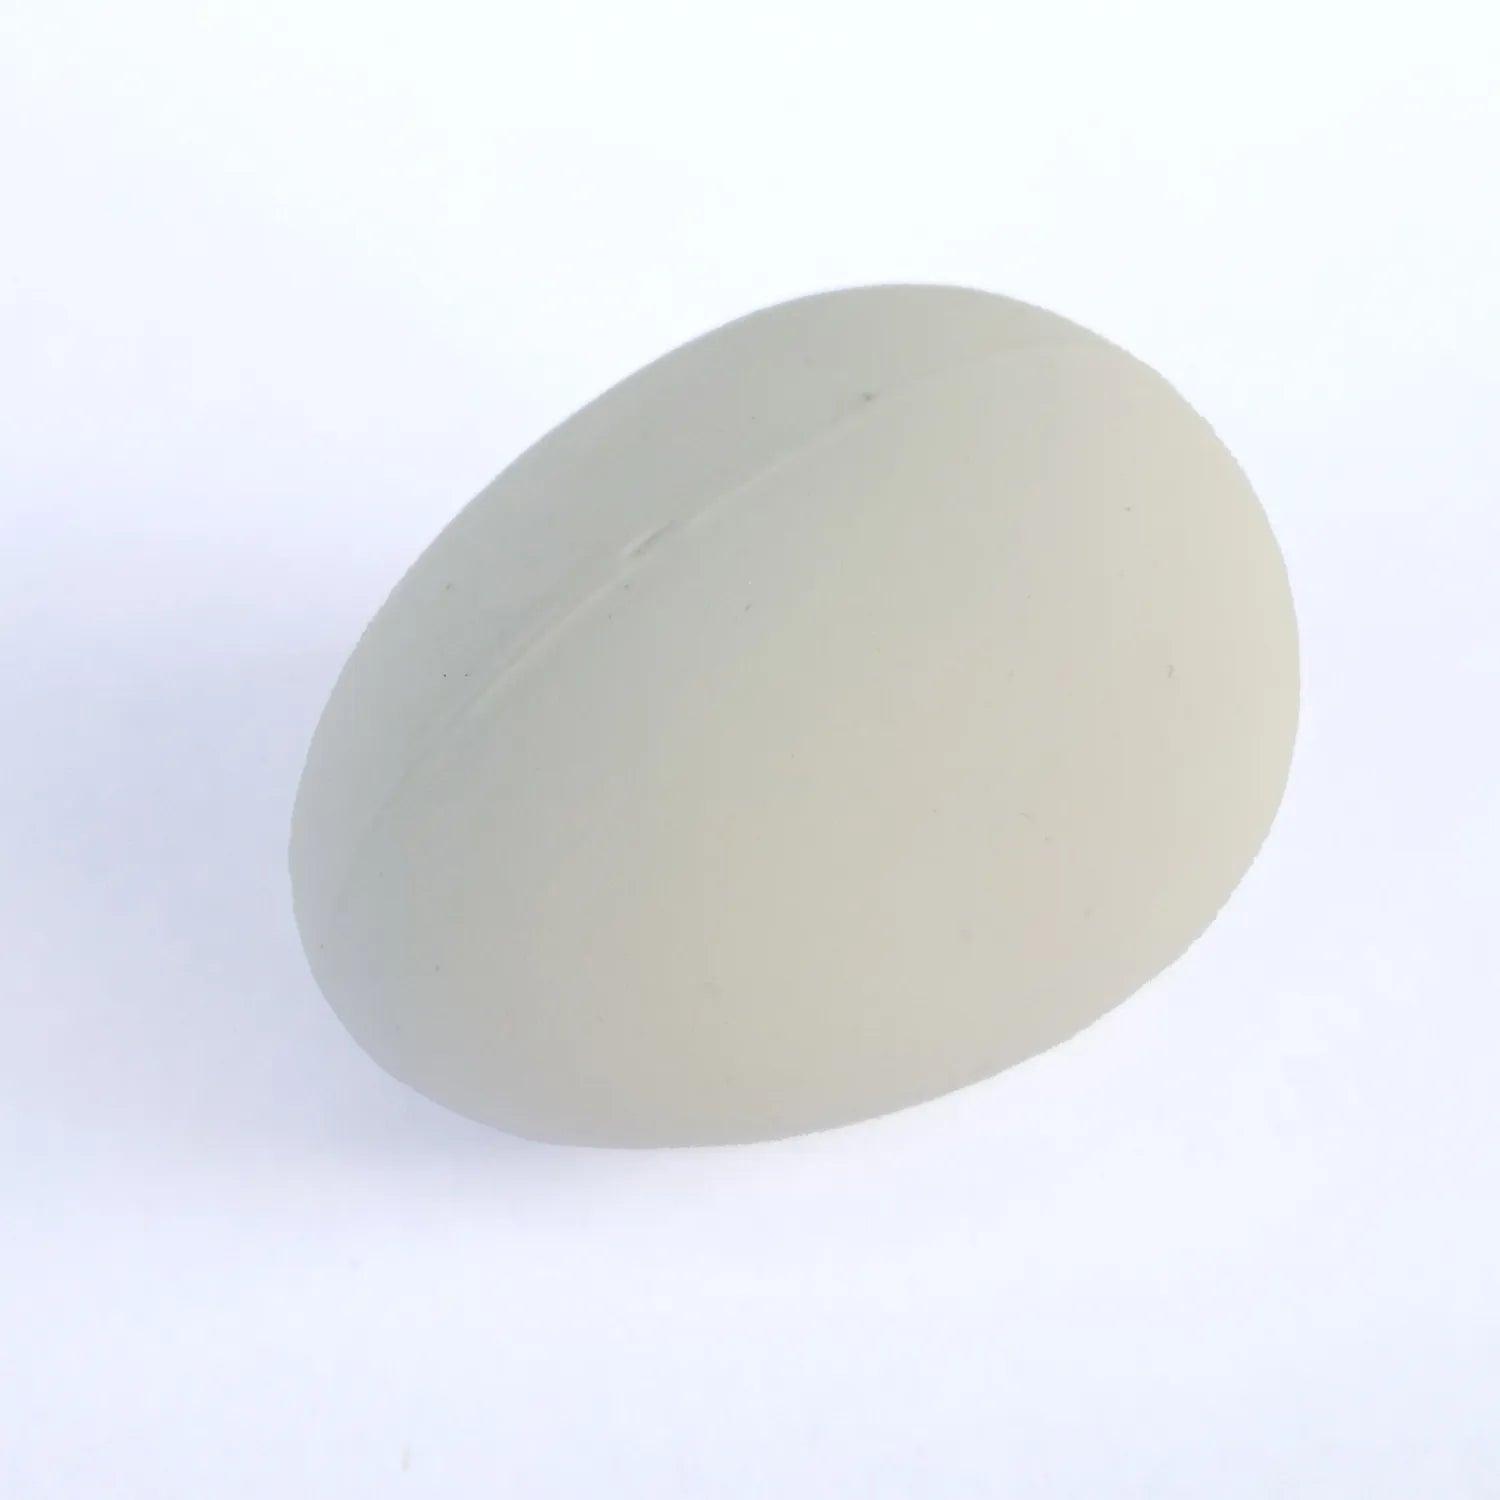 Rubber nest ei , Eierpikken voorkomen bij kippen